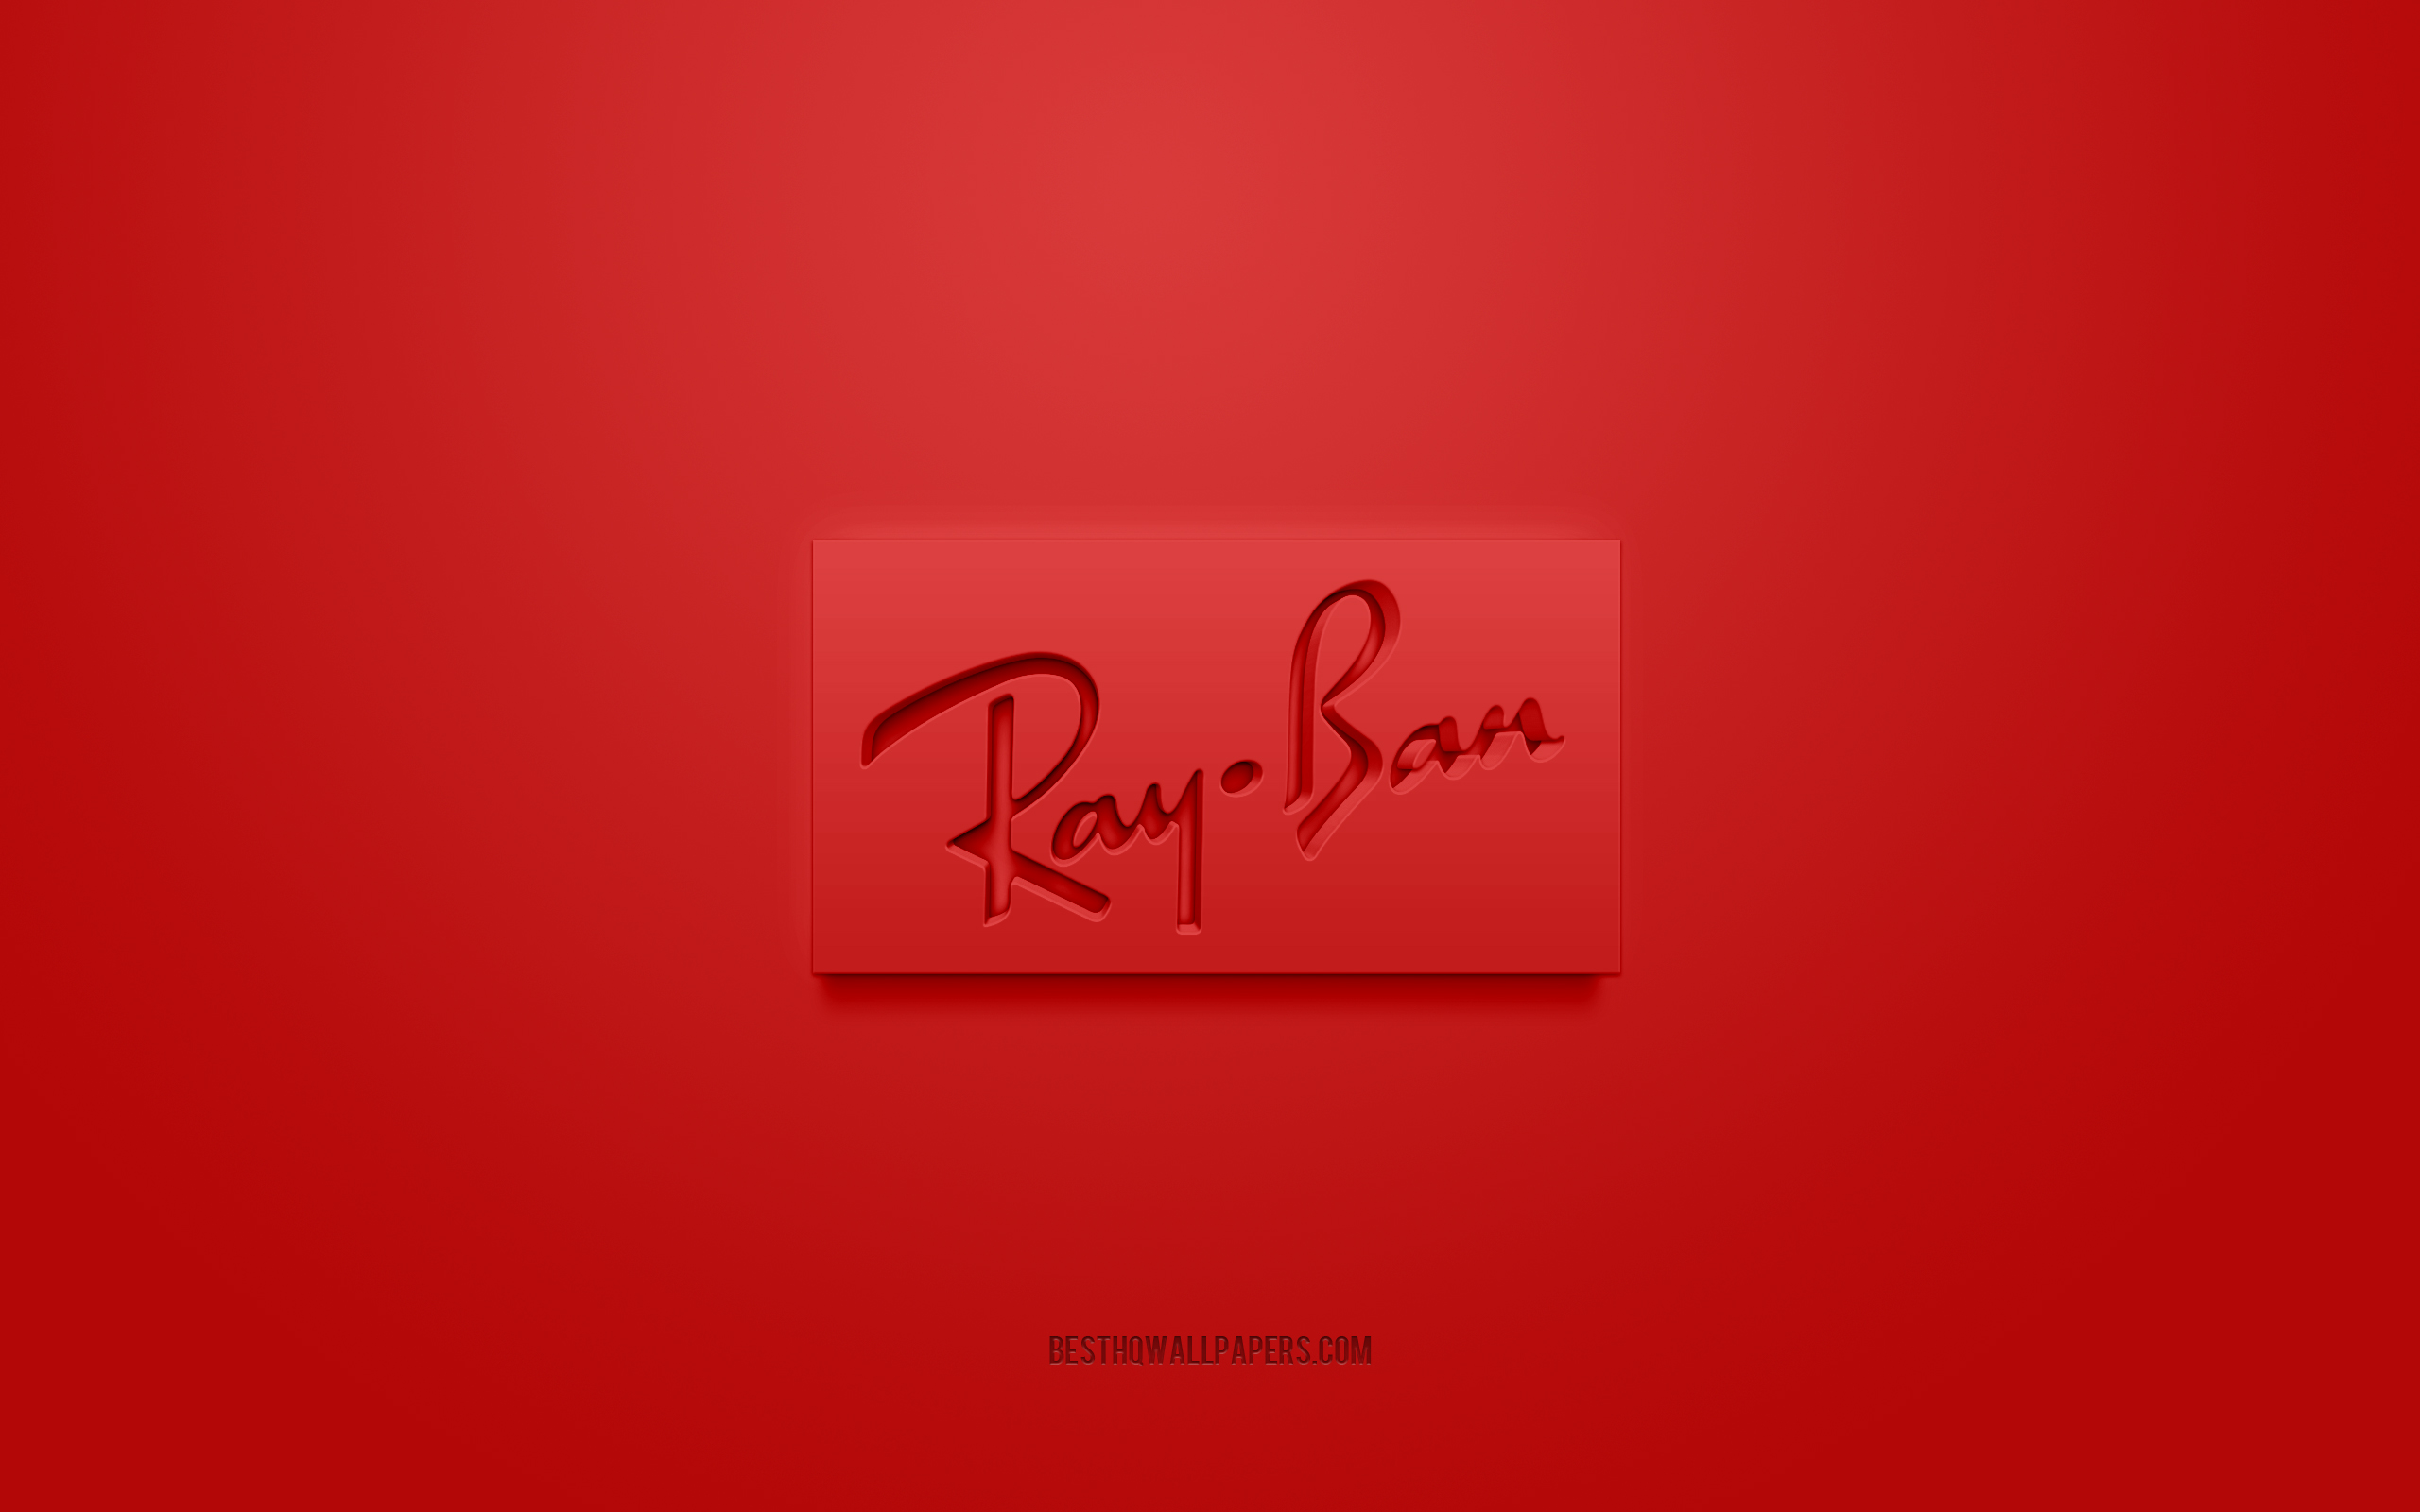 257 Ray Ban Logo Images, Stock Photos & Vectors | Shutterstock